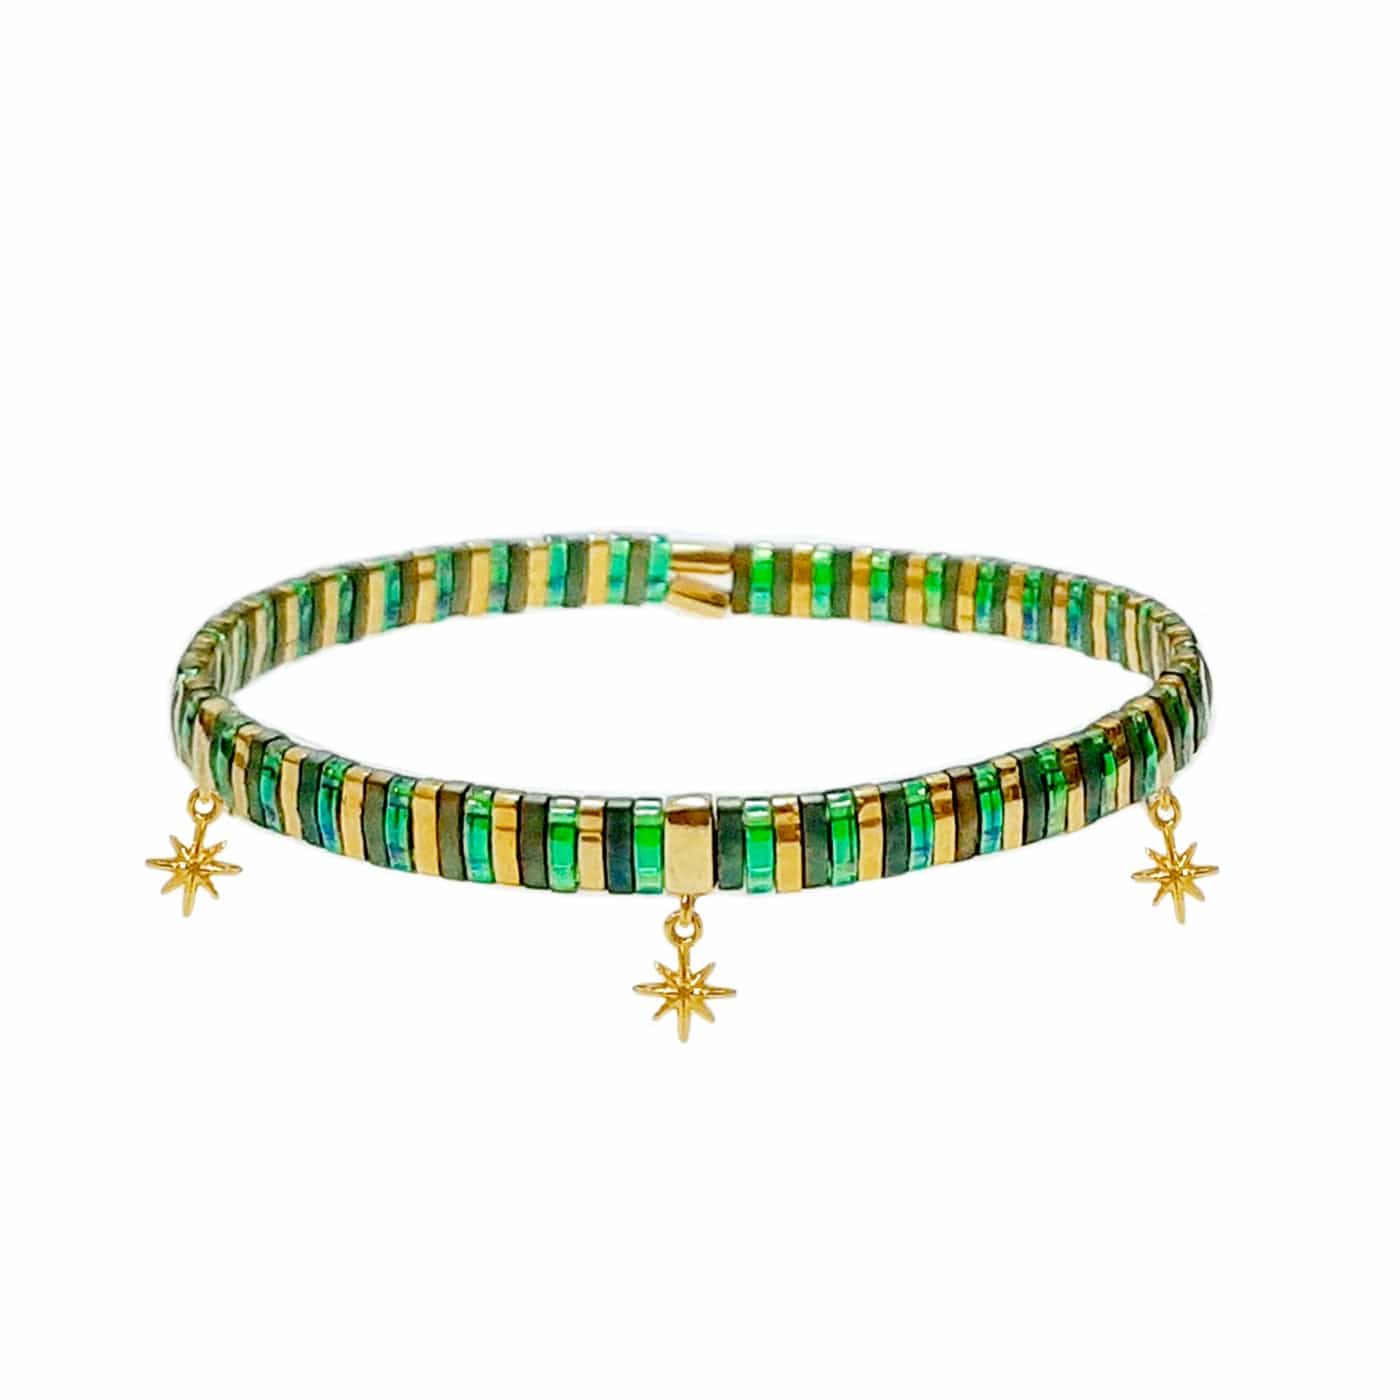 TAI JEWELRY Bracelet Handmade Tila Bead Bracelet With Starburst Charms